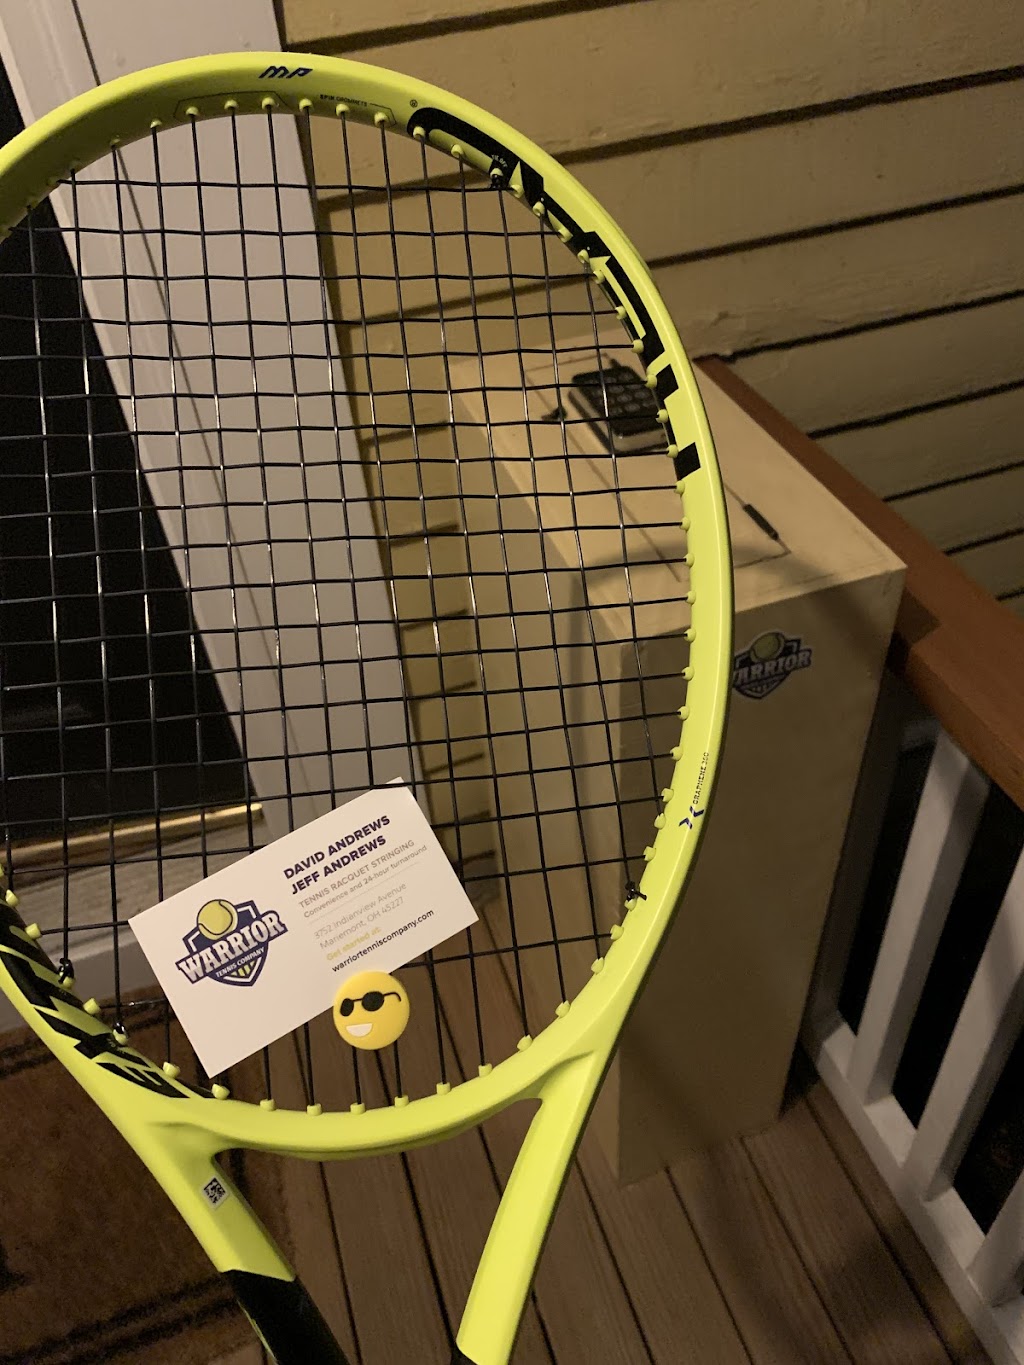 Warrior Tennis Company | 3752 Indian View Ave, Cincinnati, OH 45227, USA | Phone: (513) 549-4842